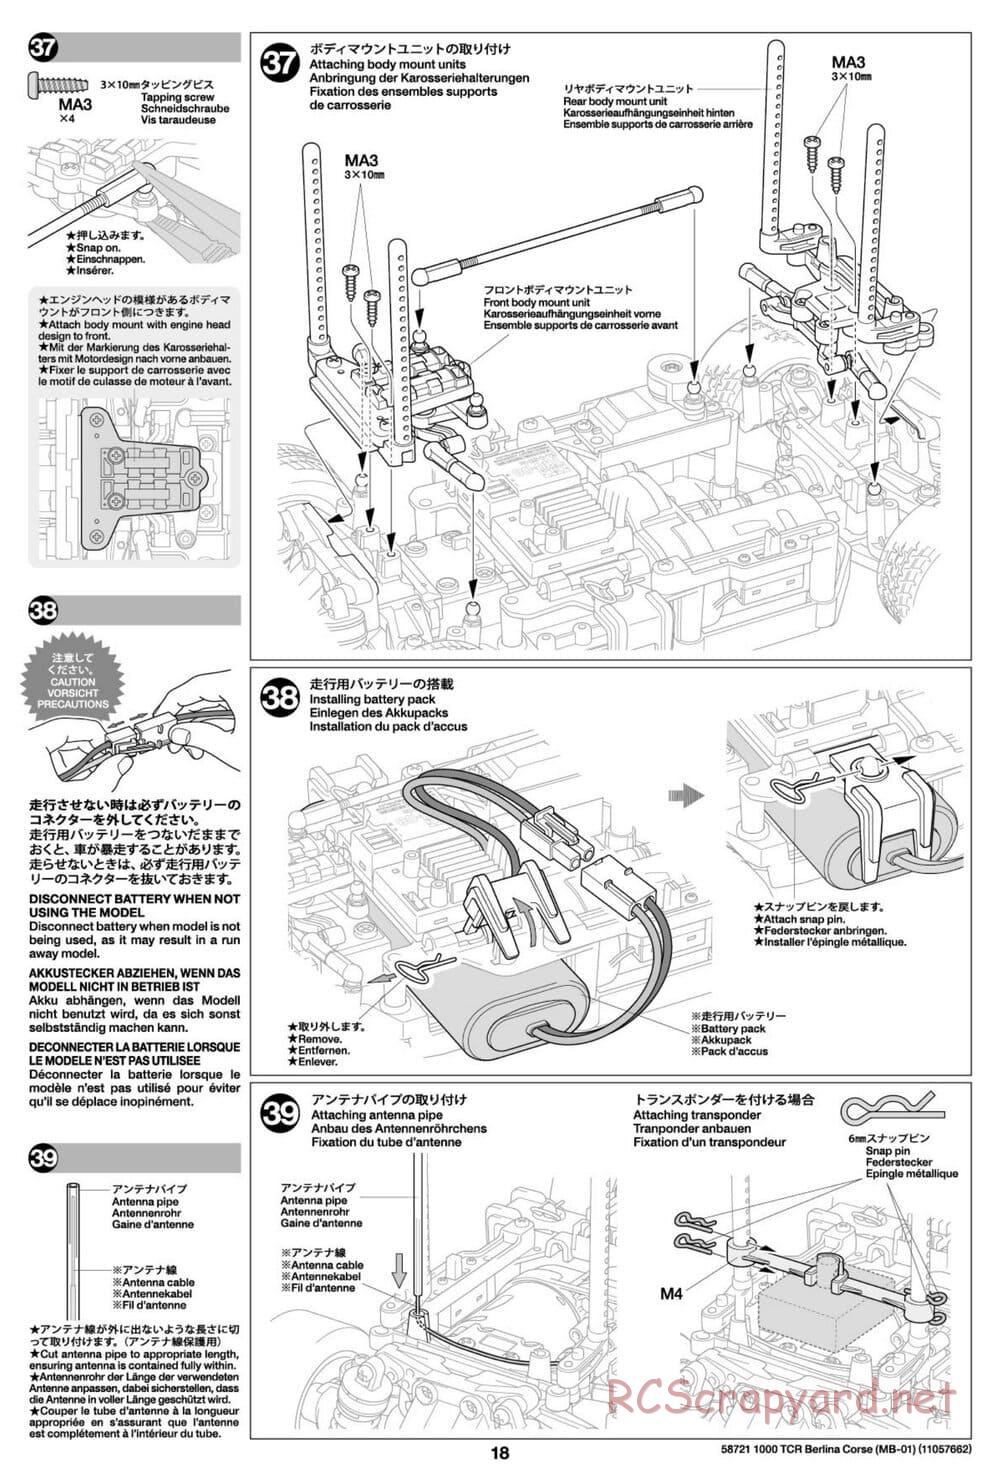 Tamiya - Fiat Abarth 1000 TCR Berlina Corsa - MB-01 Chassis - Manual - Page 18